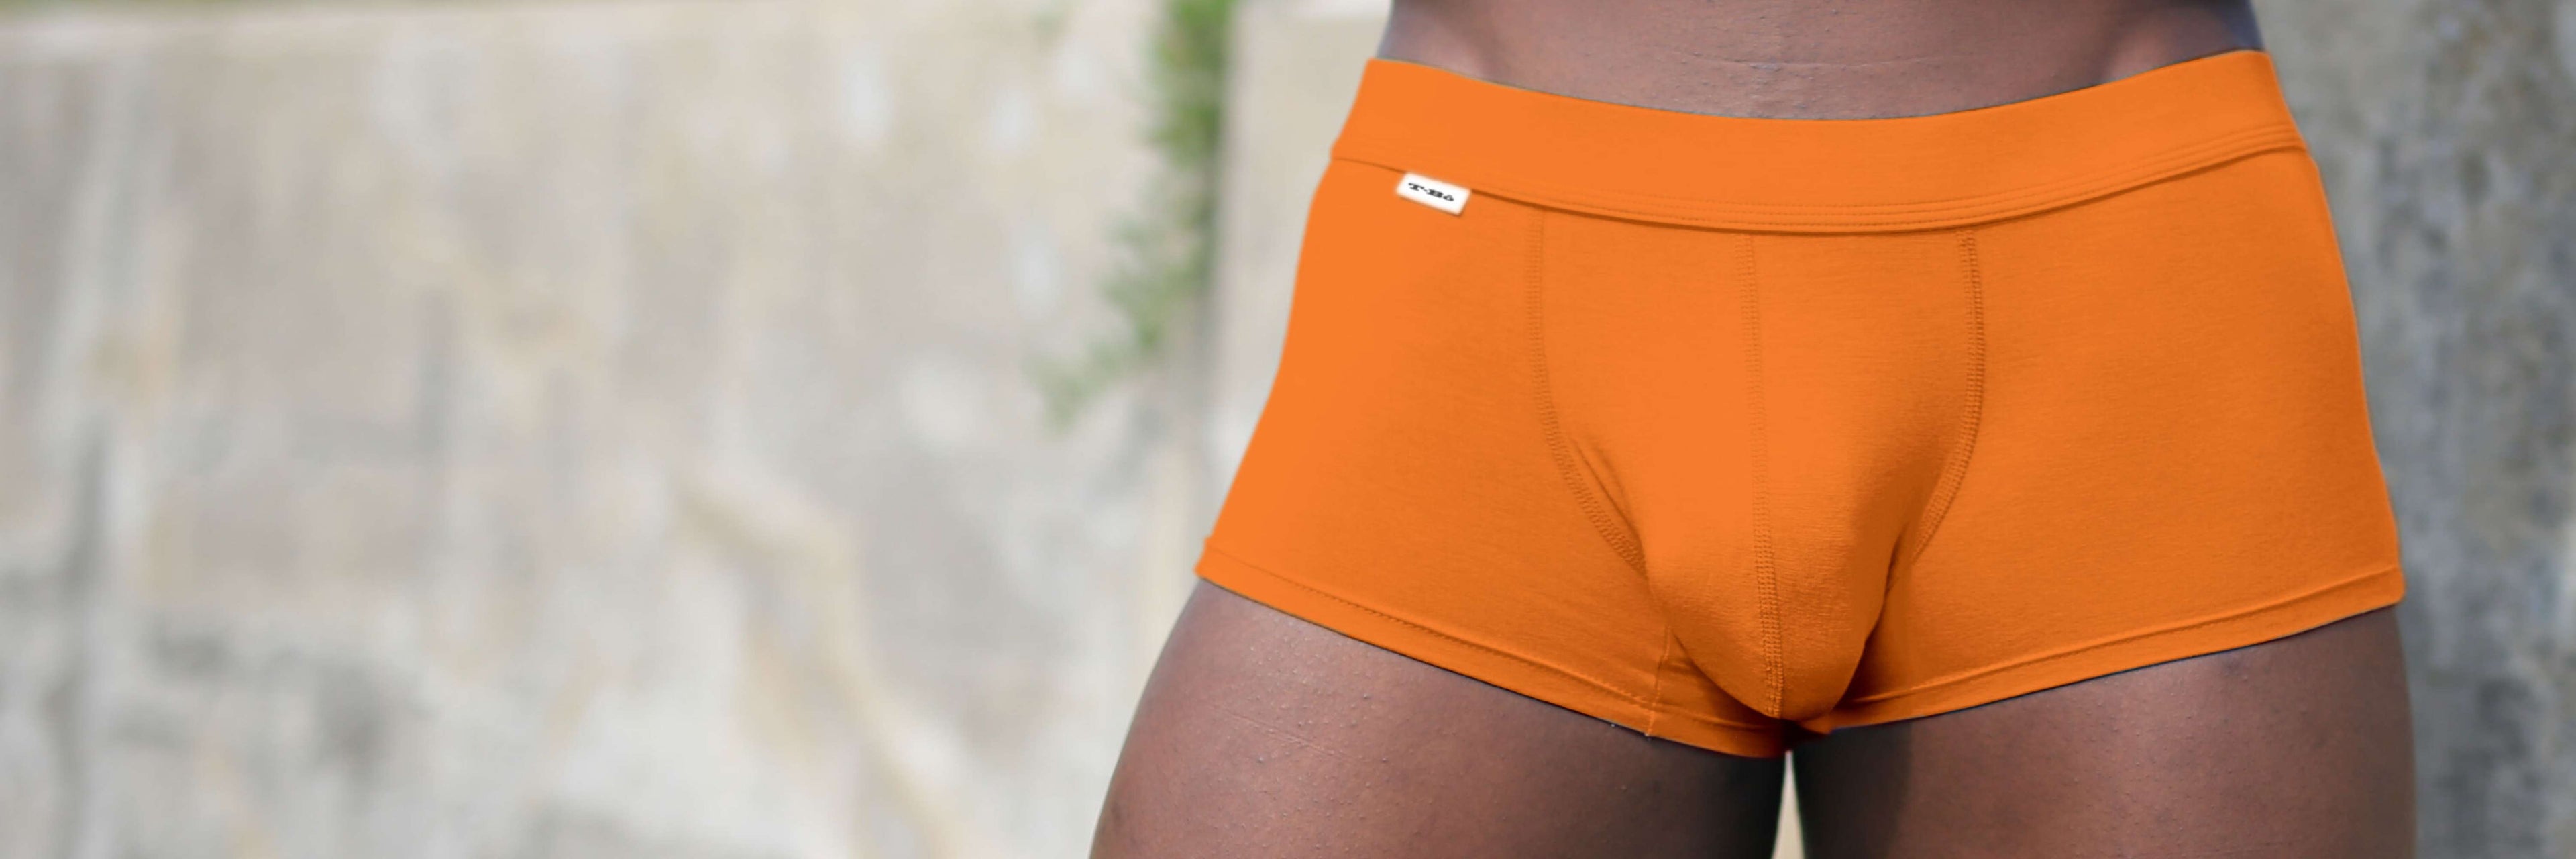 Contour Pouch Underwear: Natural Bulge-enhancing Underwear